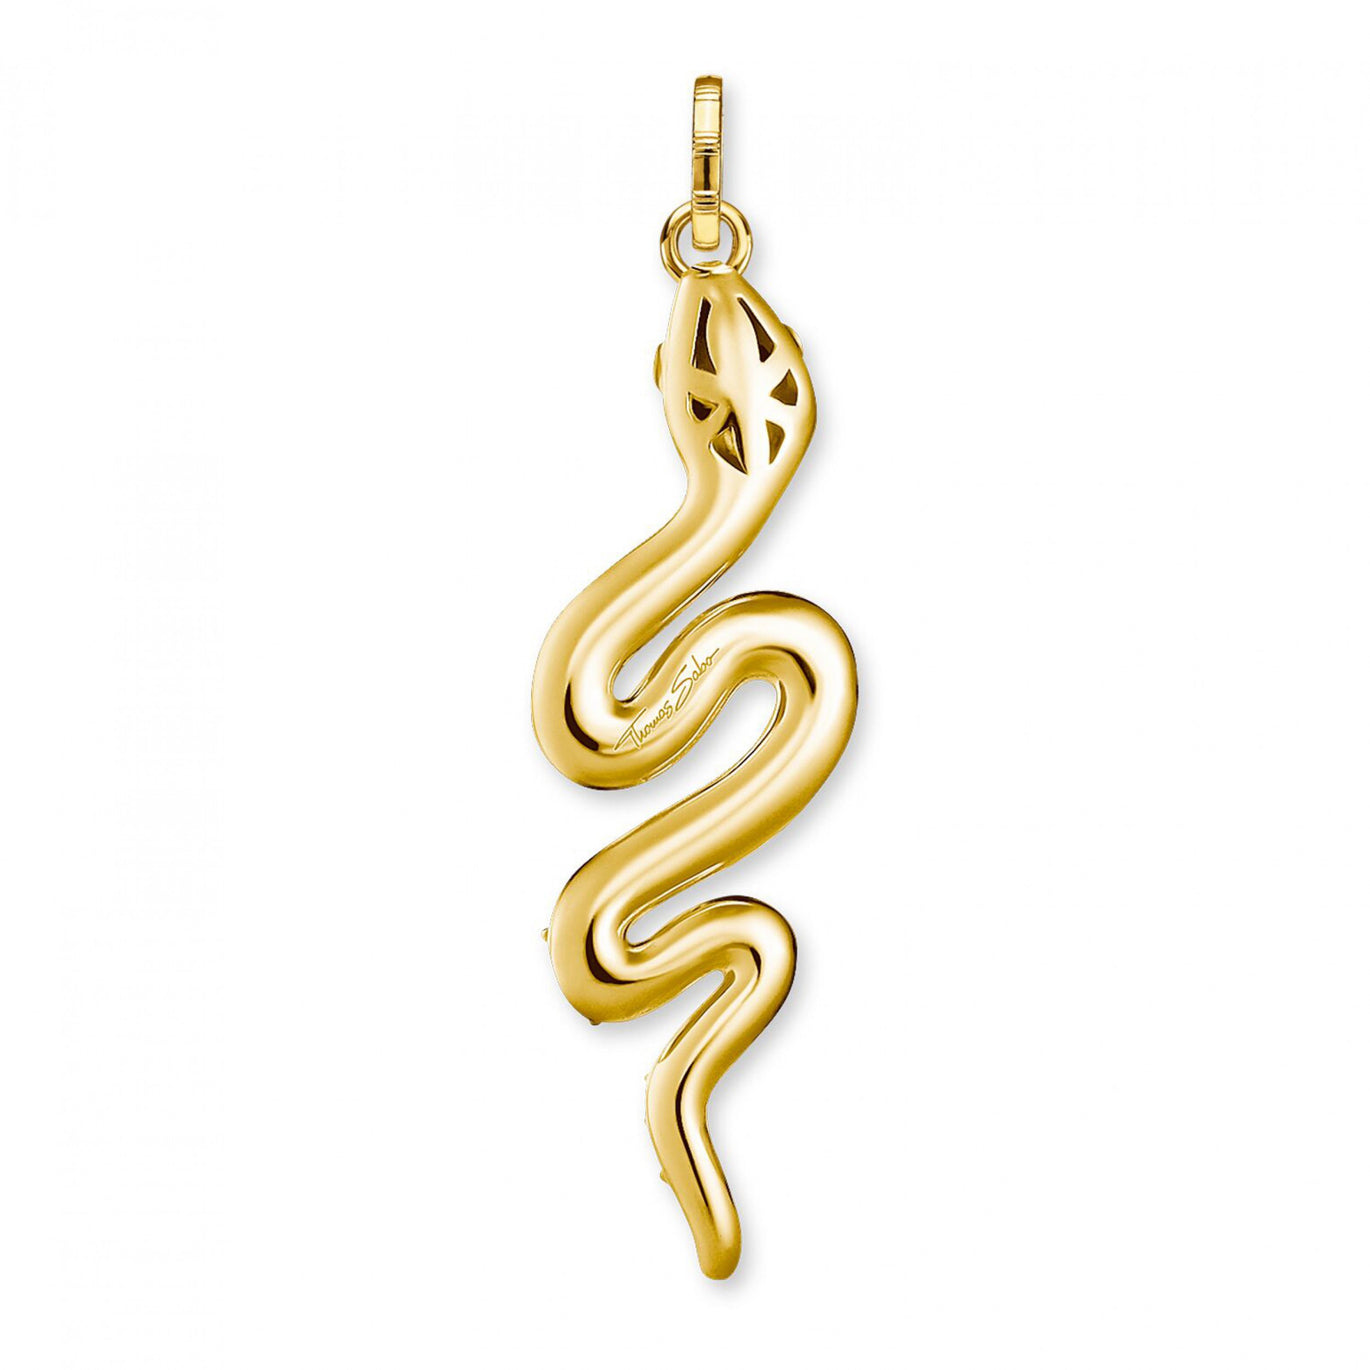 Thomas Sabo Pendant Bright Golden-Coloured Snake